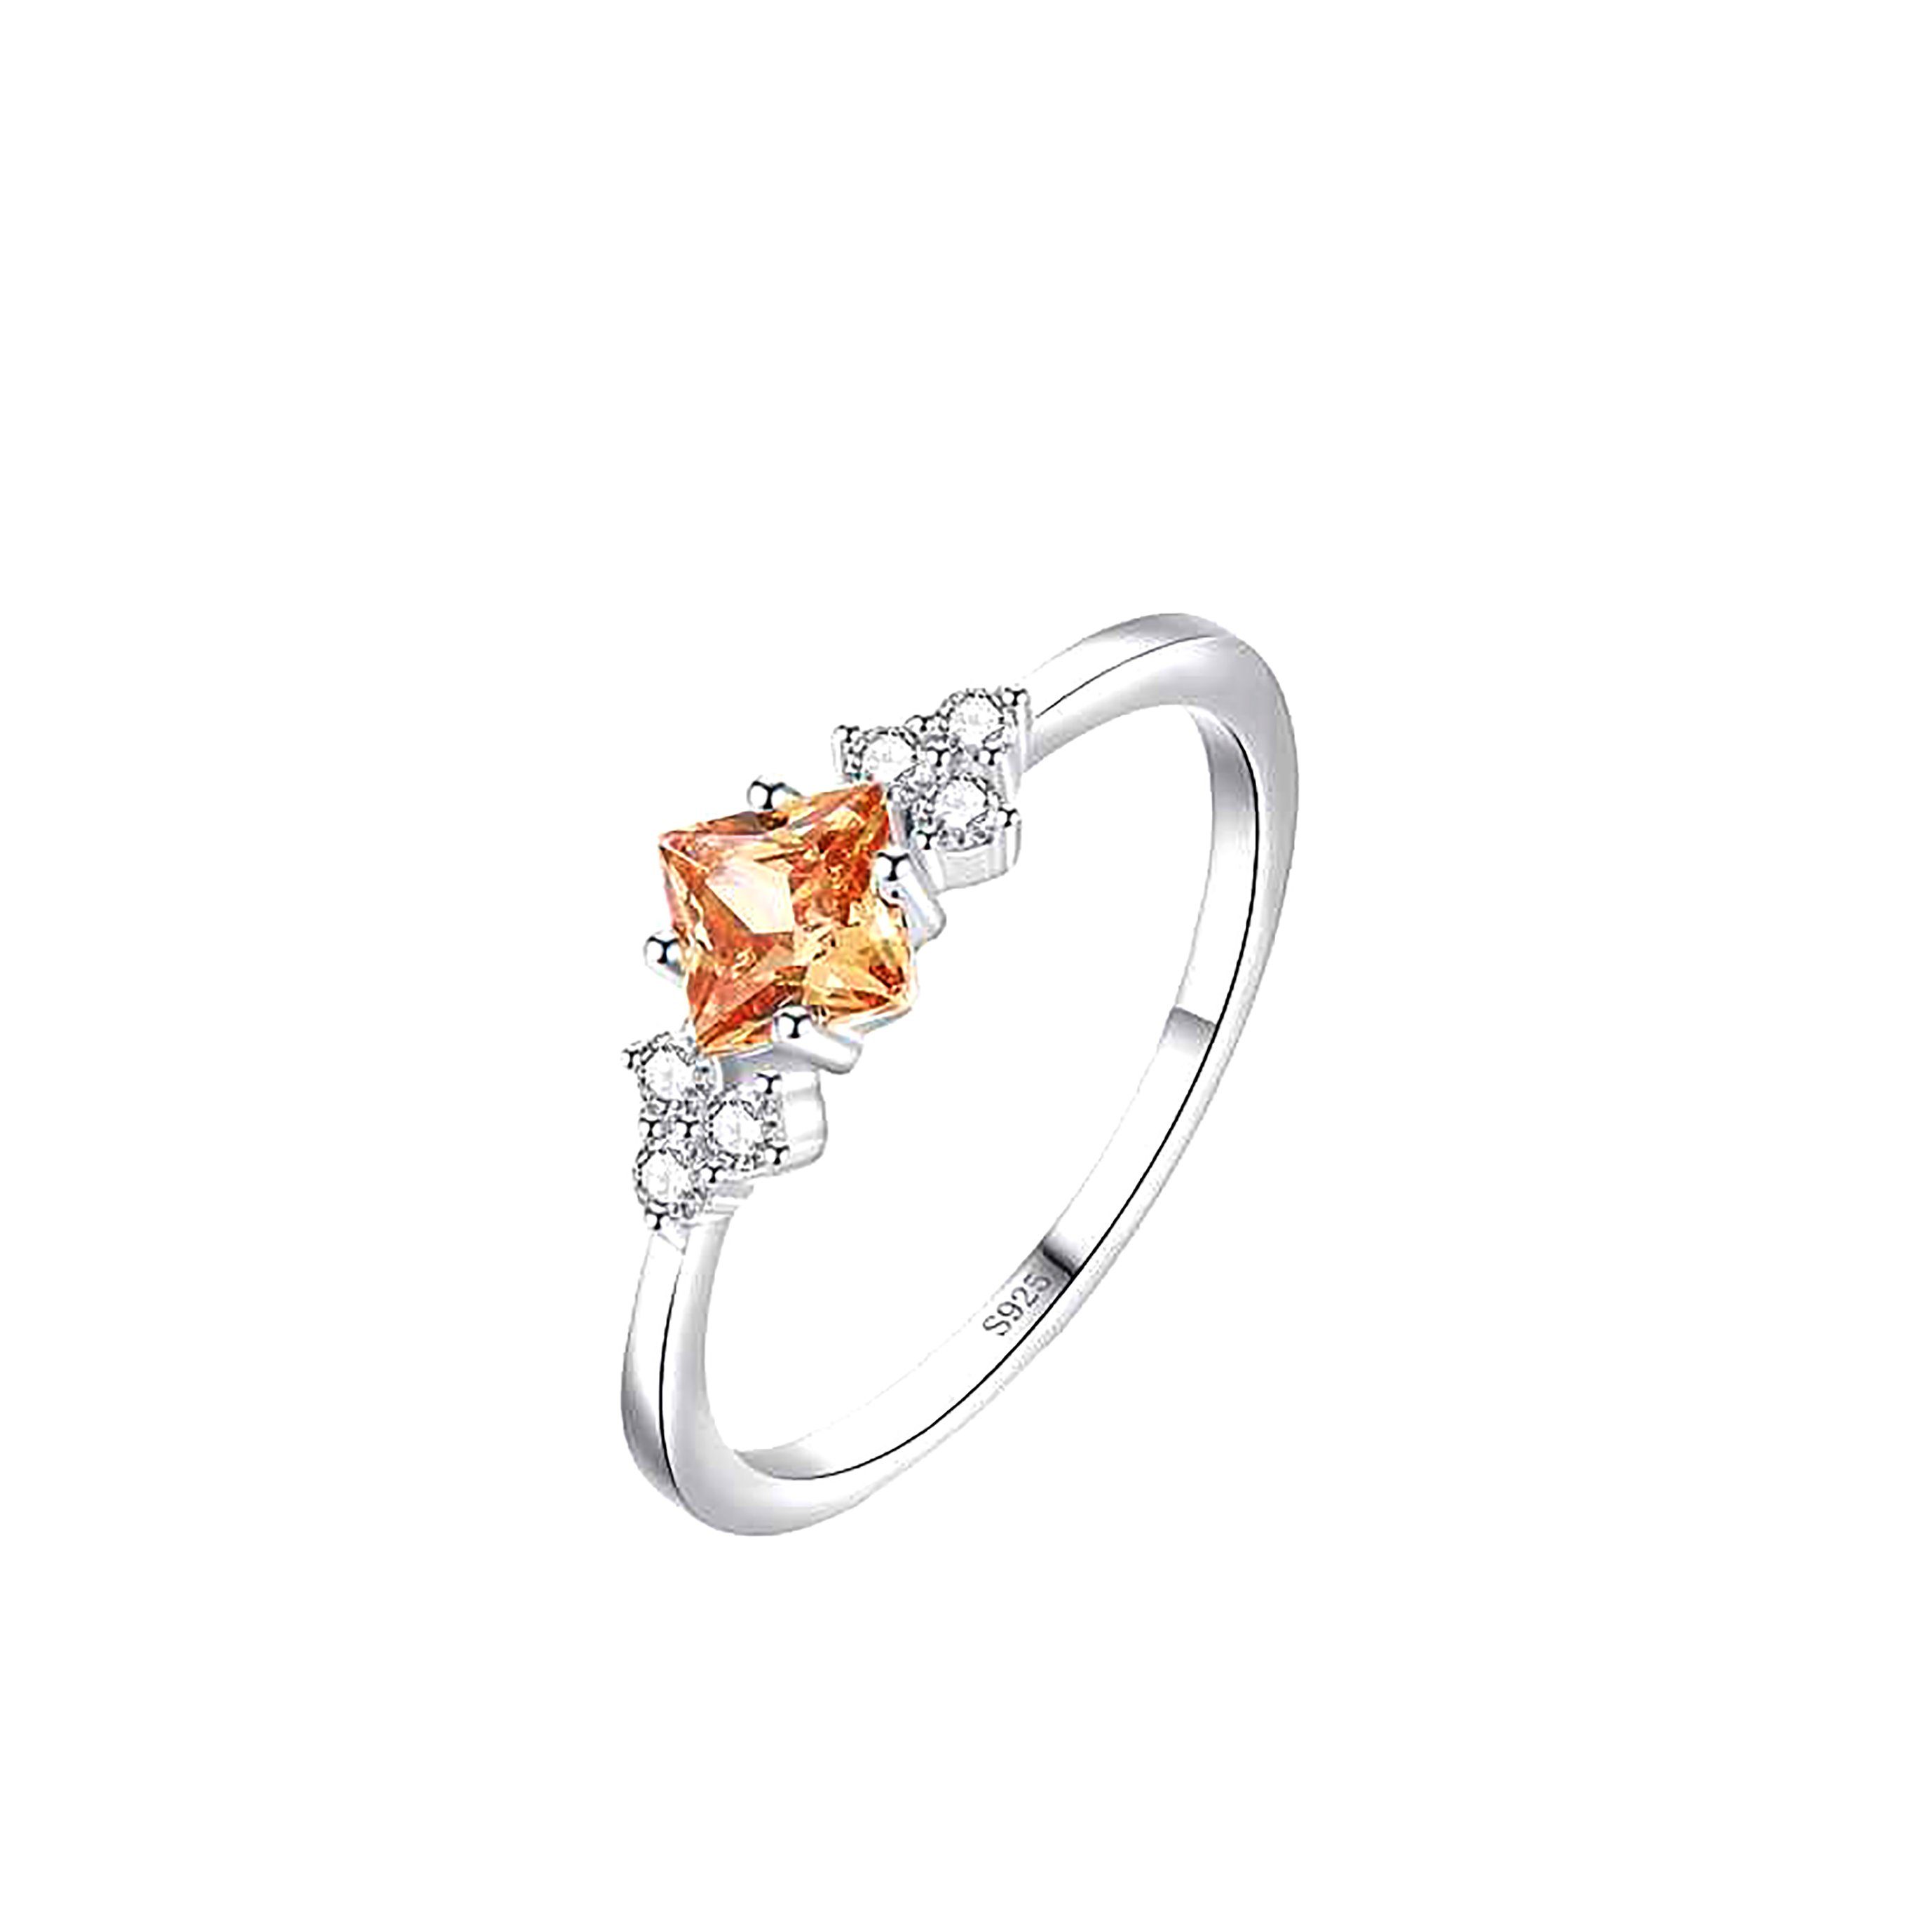 Zirkonia Fingerring Silber Ping Super Ring Kreativer für Frauen Tapferer Sparkle